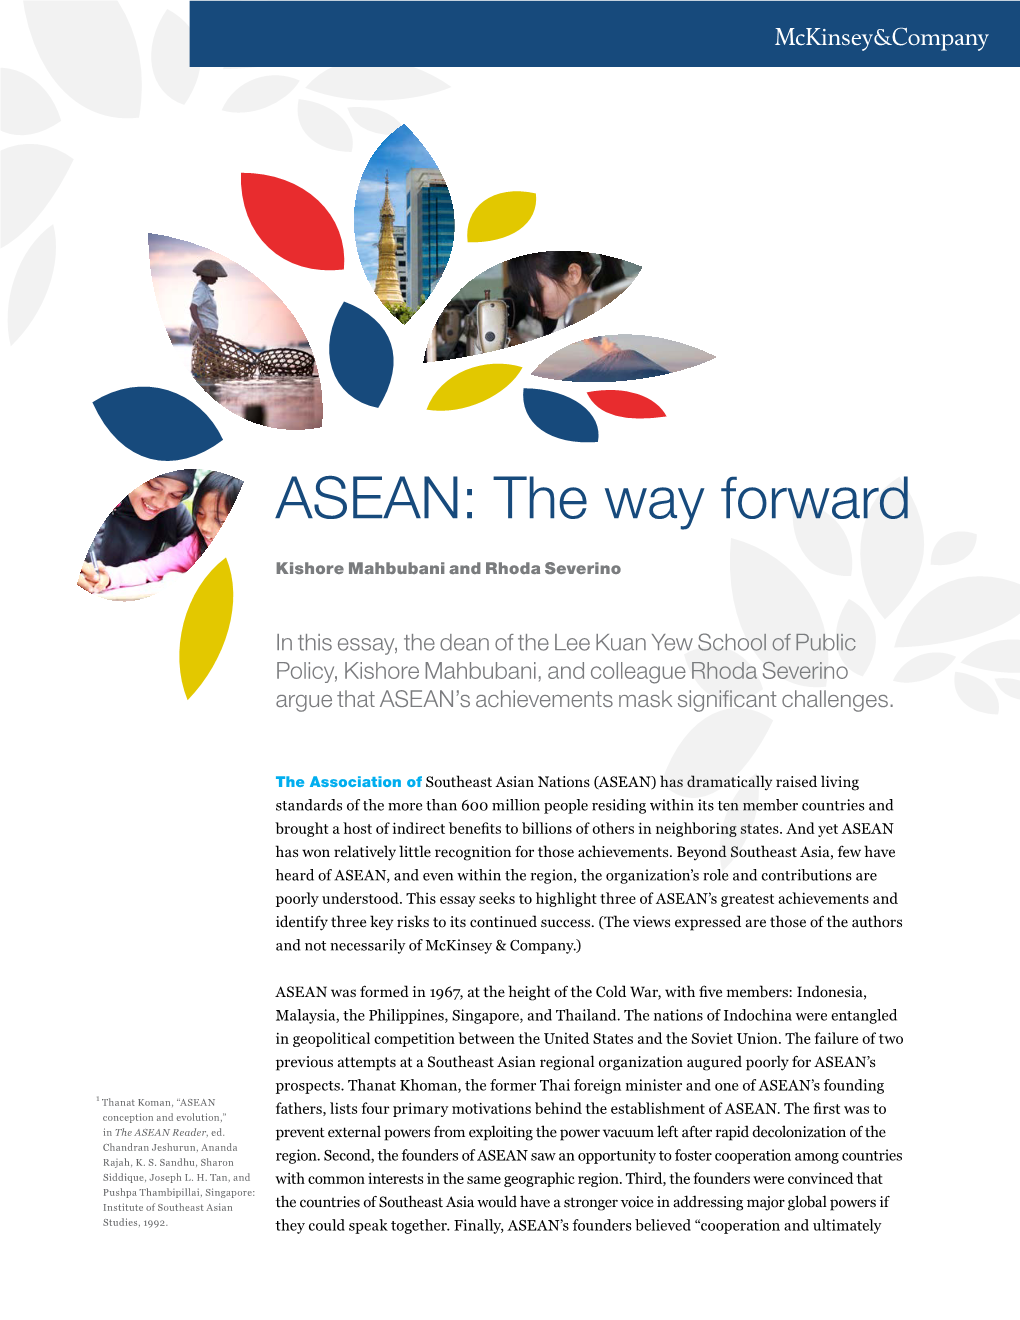 ASEAN: the Way Forward